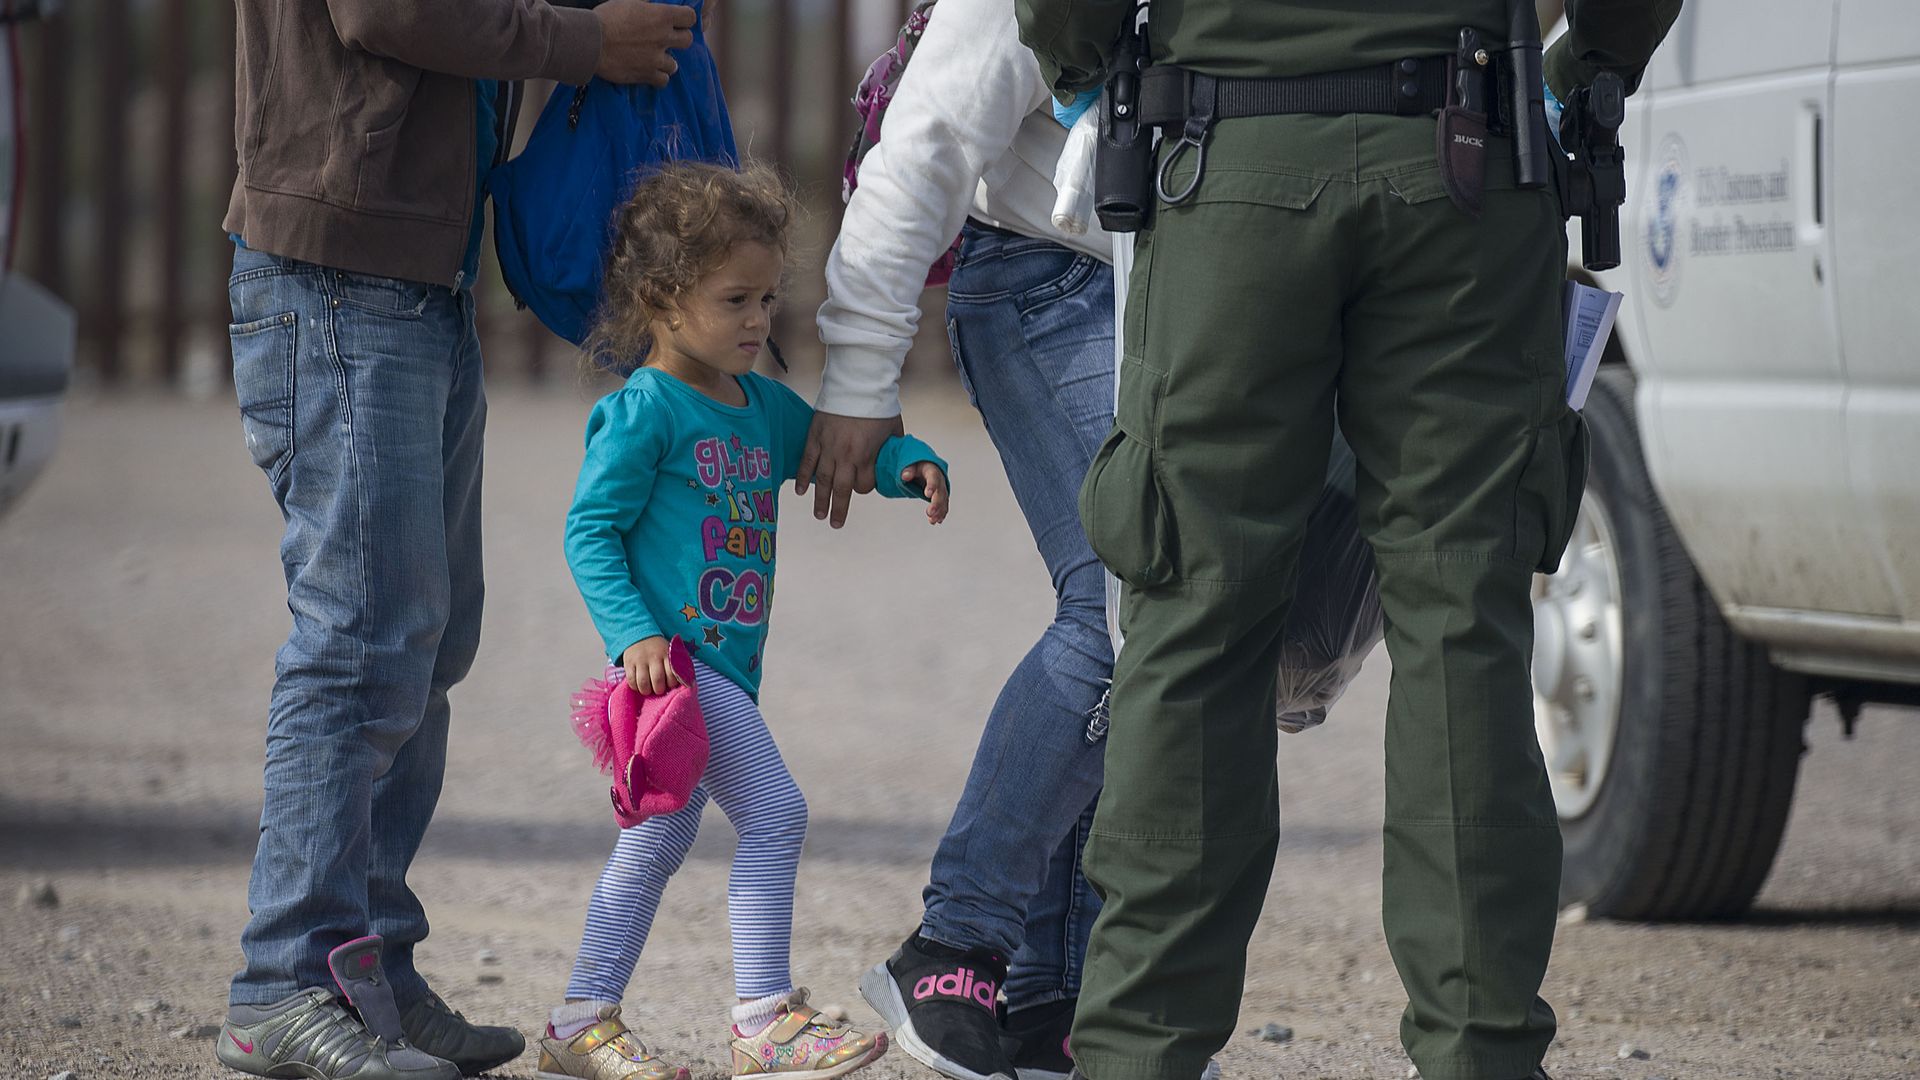 Migrants being processed by Border Patrol